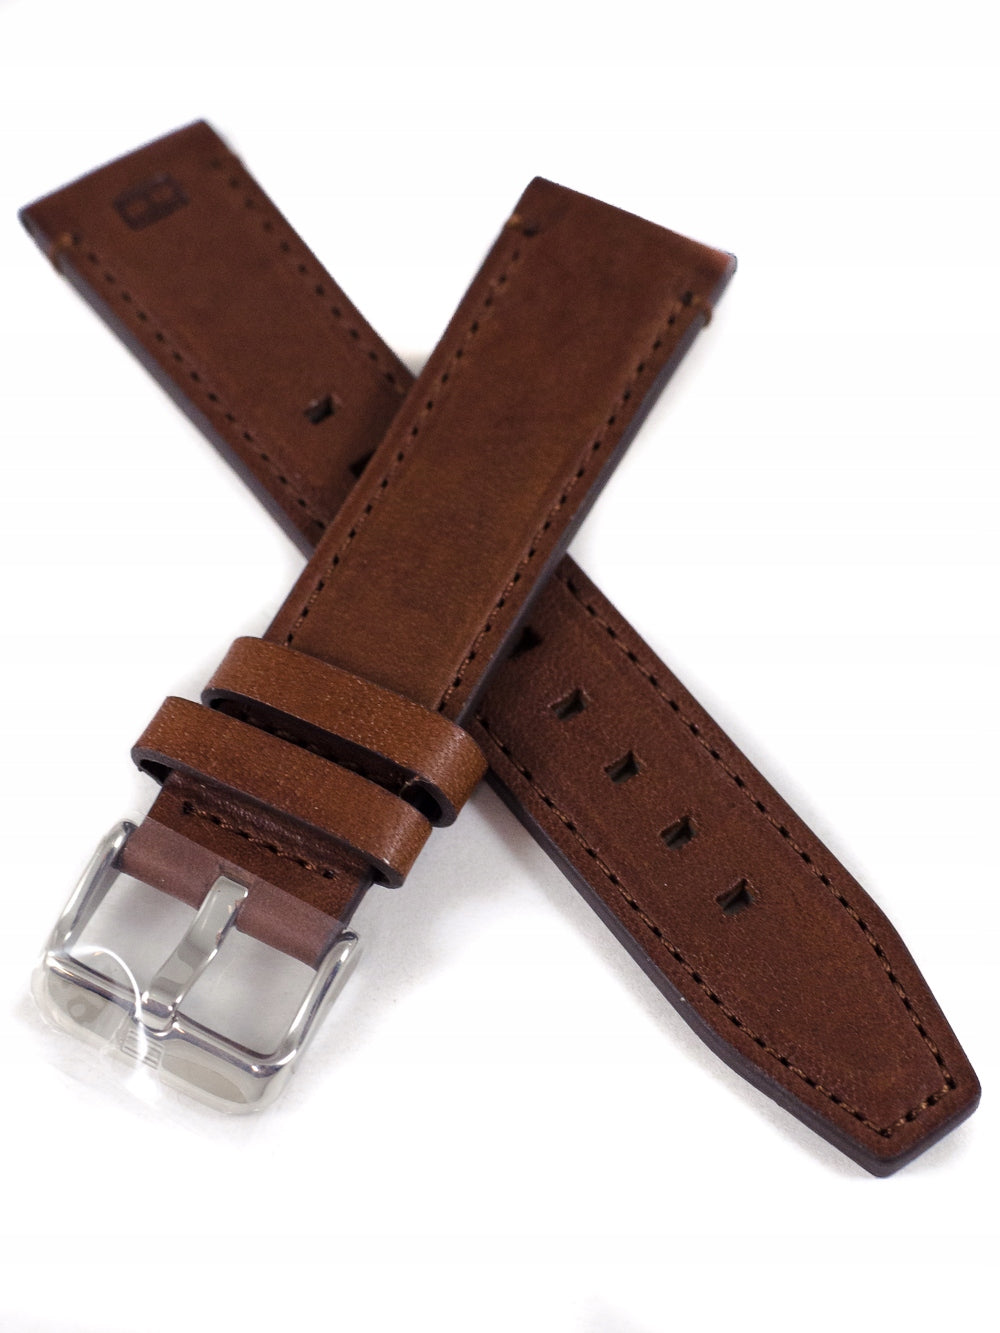 Tommy Hilfiger Spencer Blue Dial Brown Leather Strap Watch for Men - 1791642